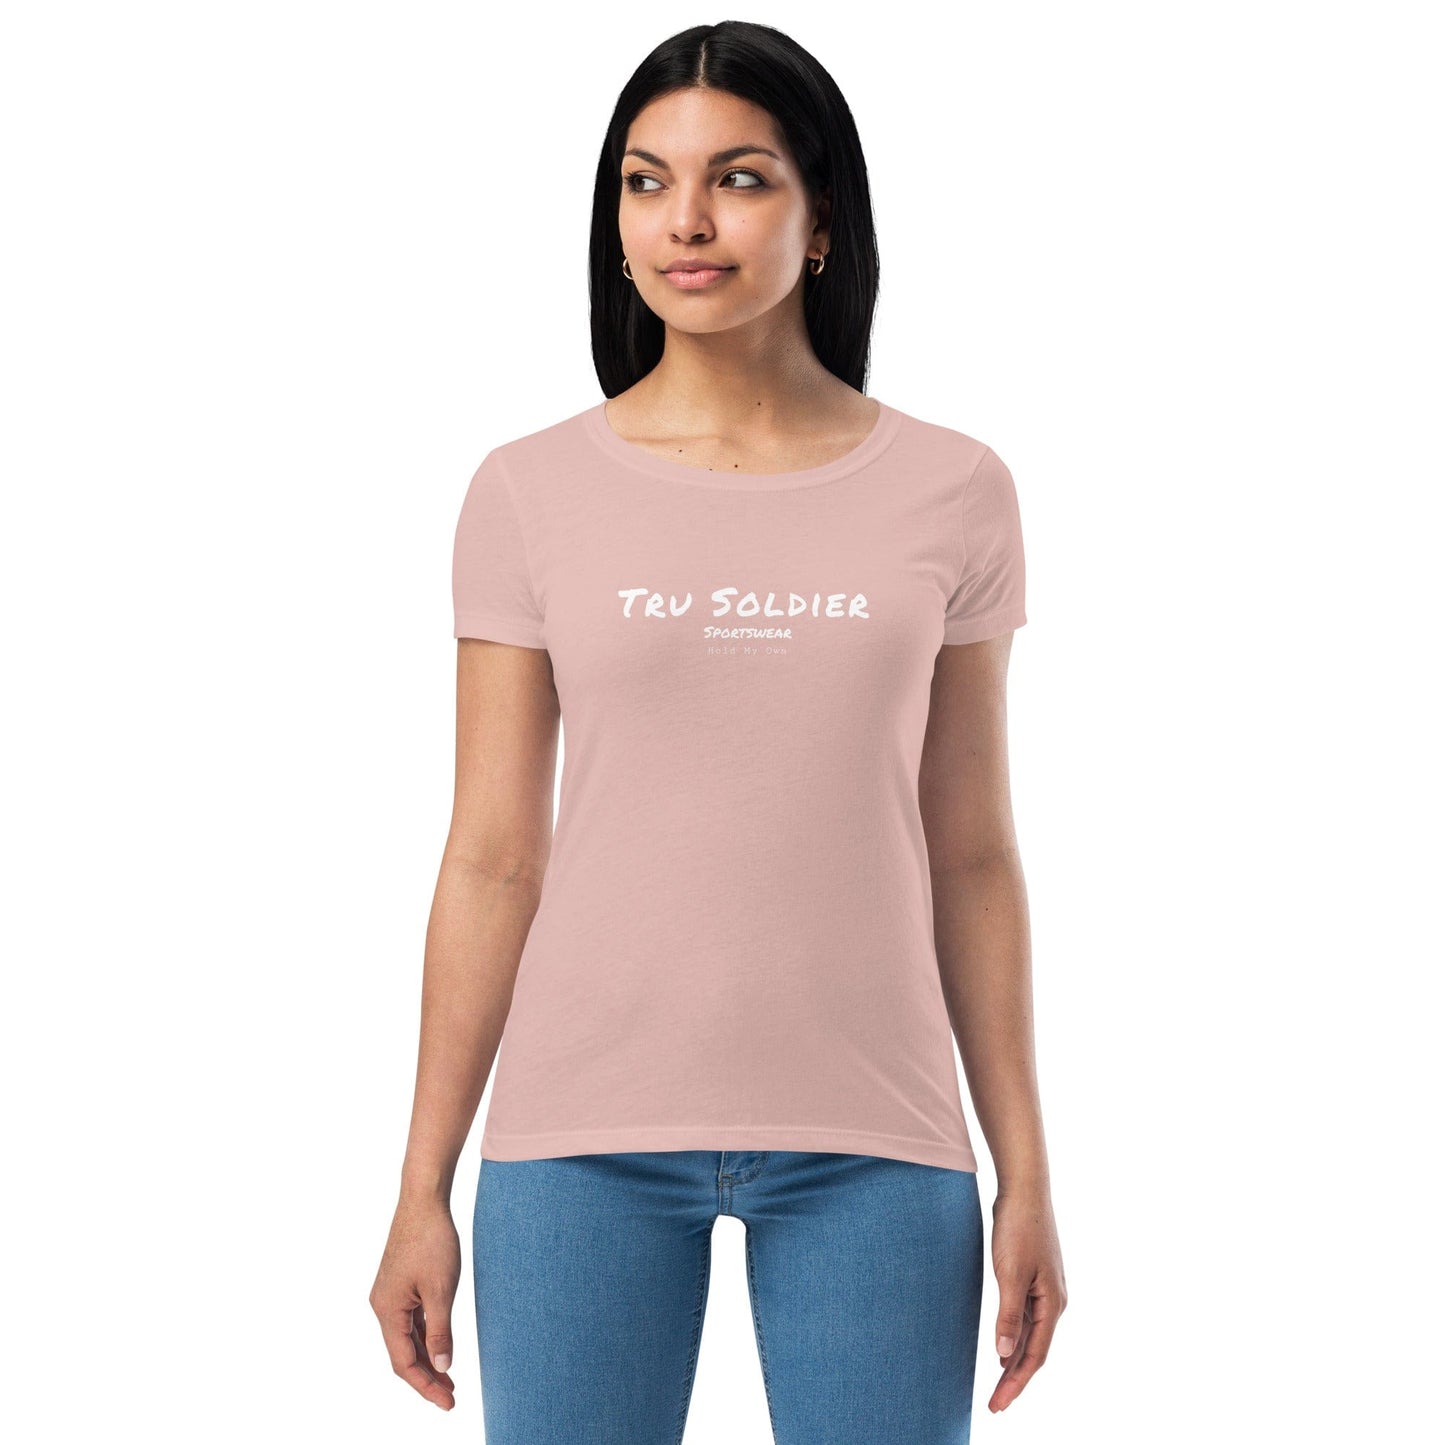 Tru Soldier Sportswear  Desert Pink / XS Women’s fitted t-shirt